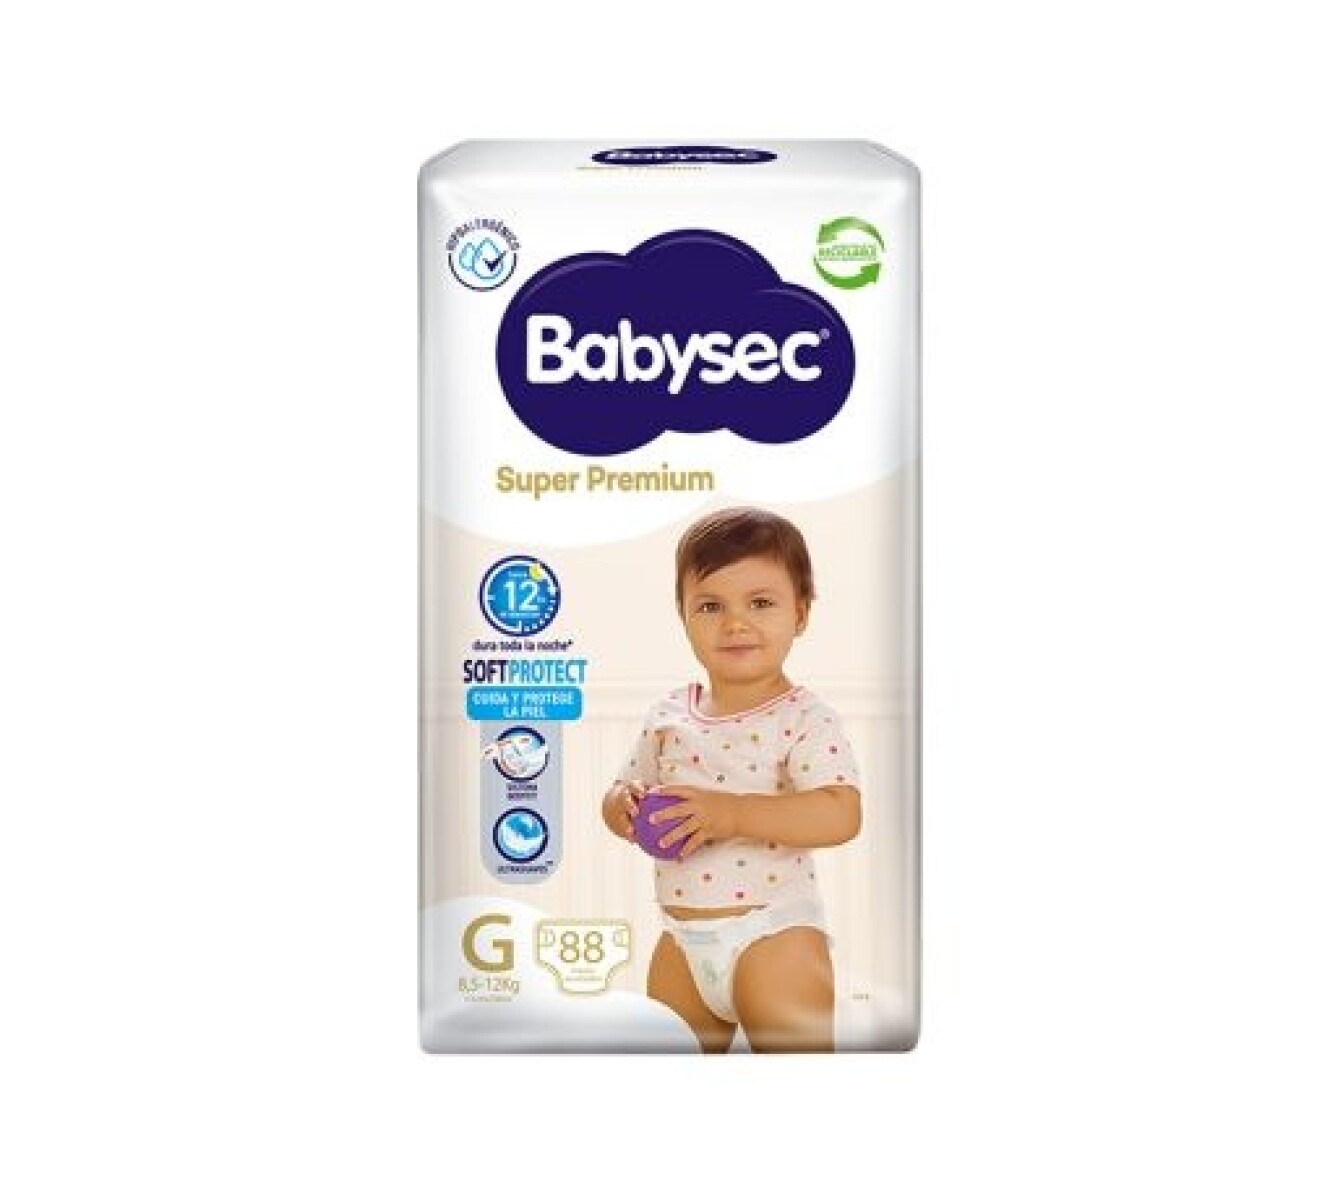 Babysec Super Premium Gx88 